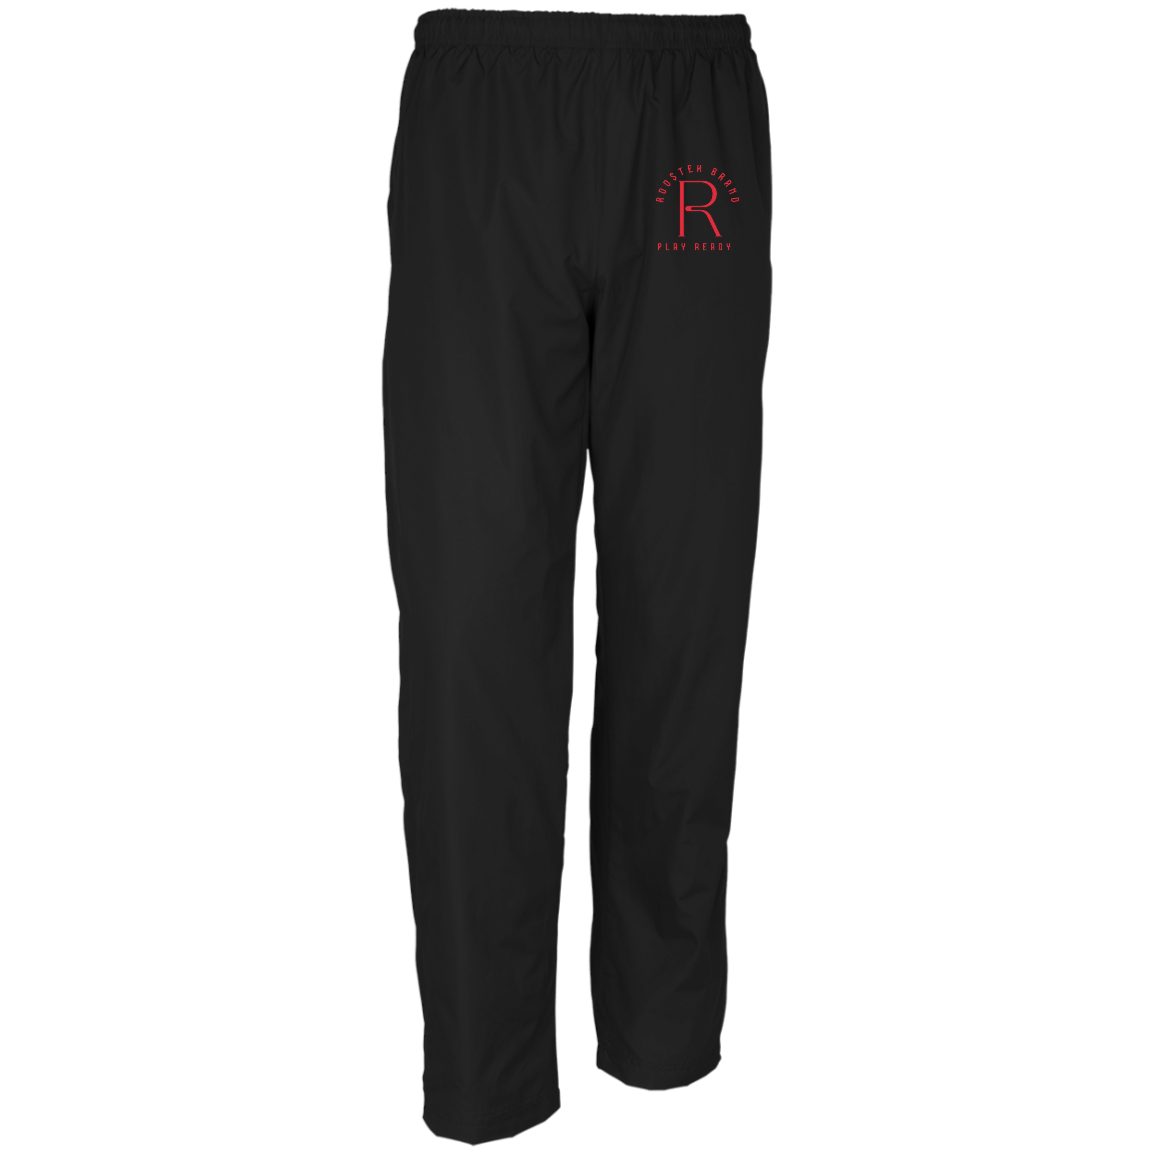 Roo$ter Brand Wind Pants